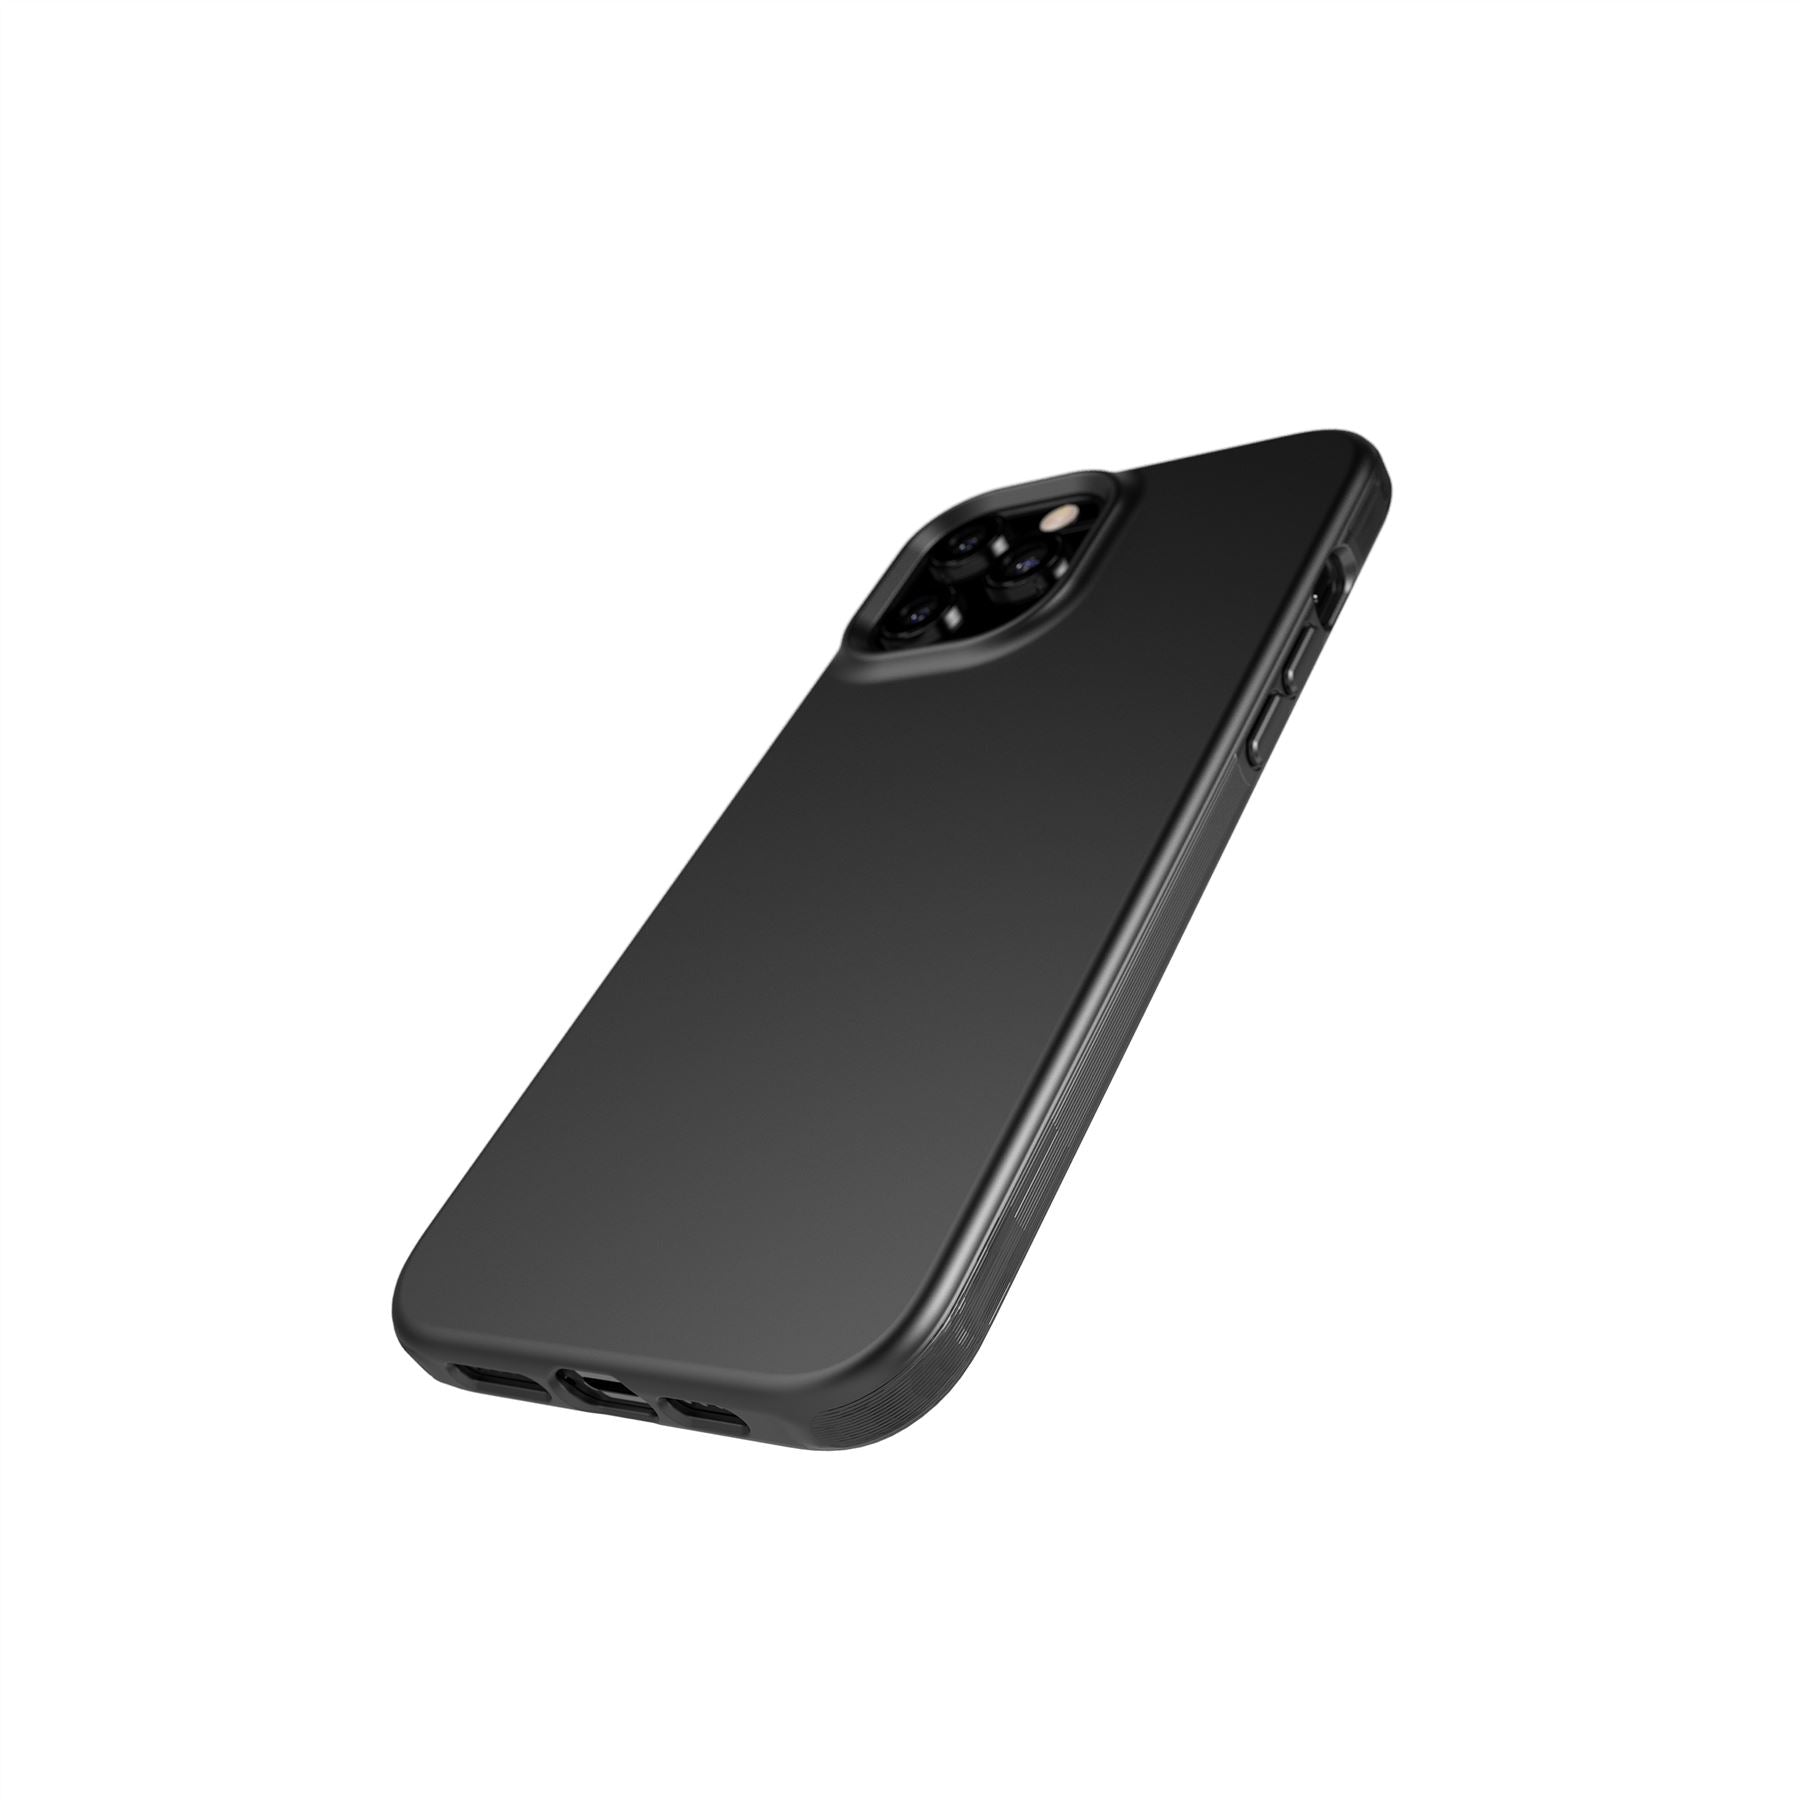 Evo Slim - Apple iPhone 12 Pro Max Case - Midnight Green